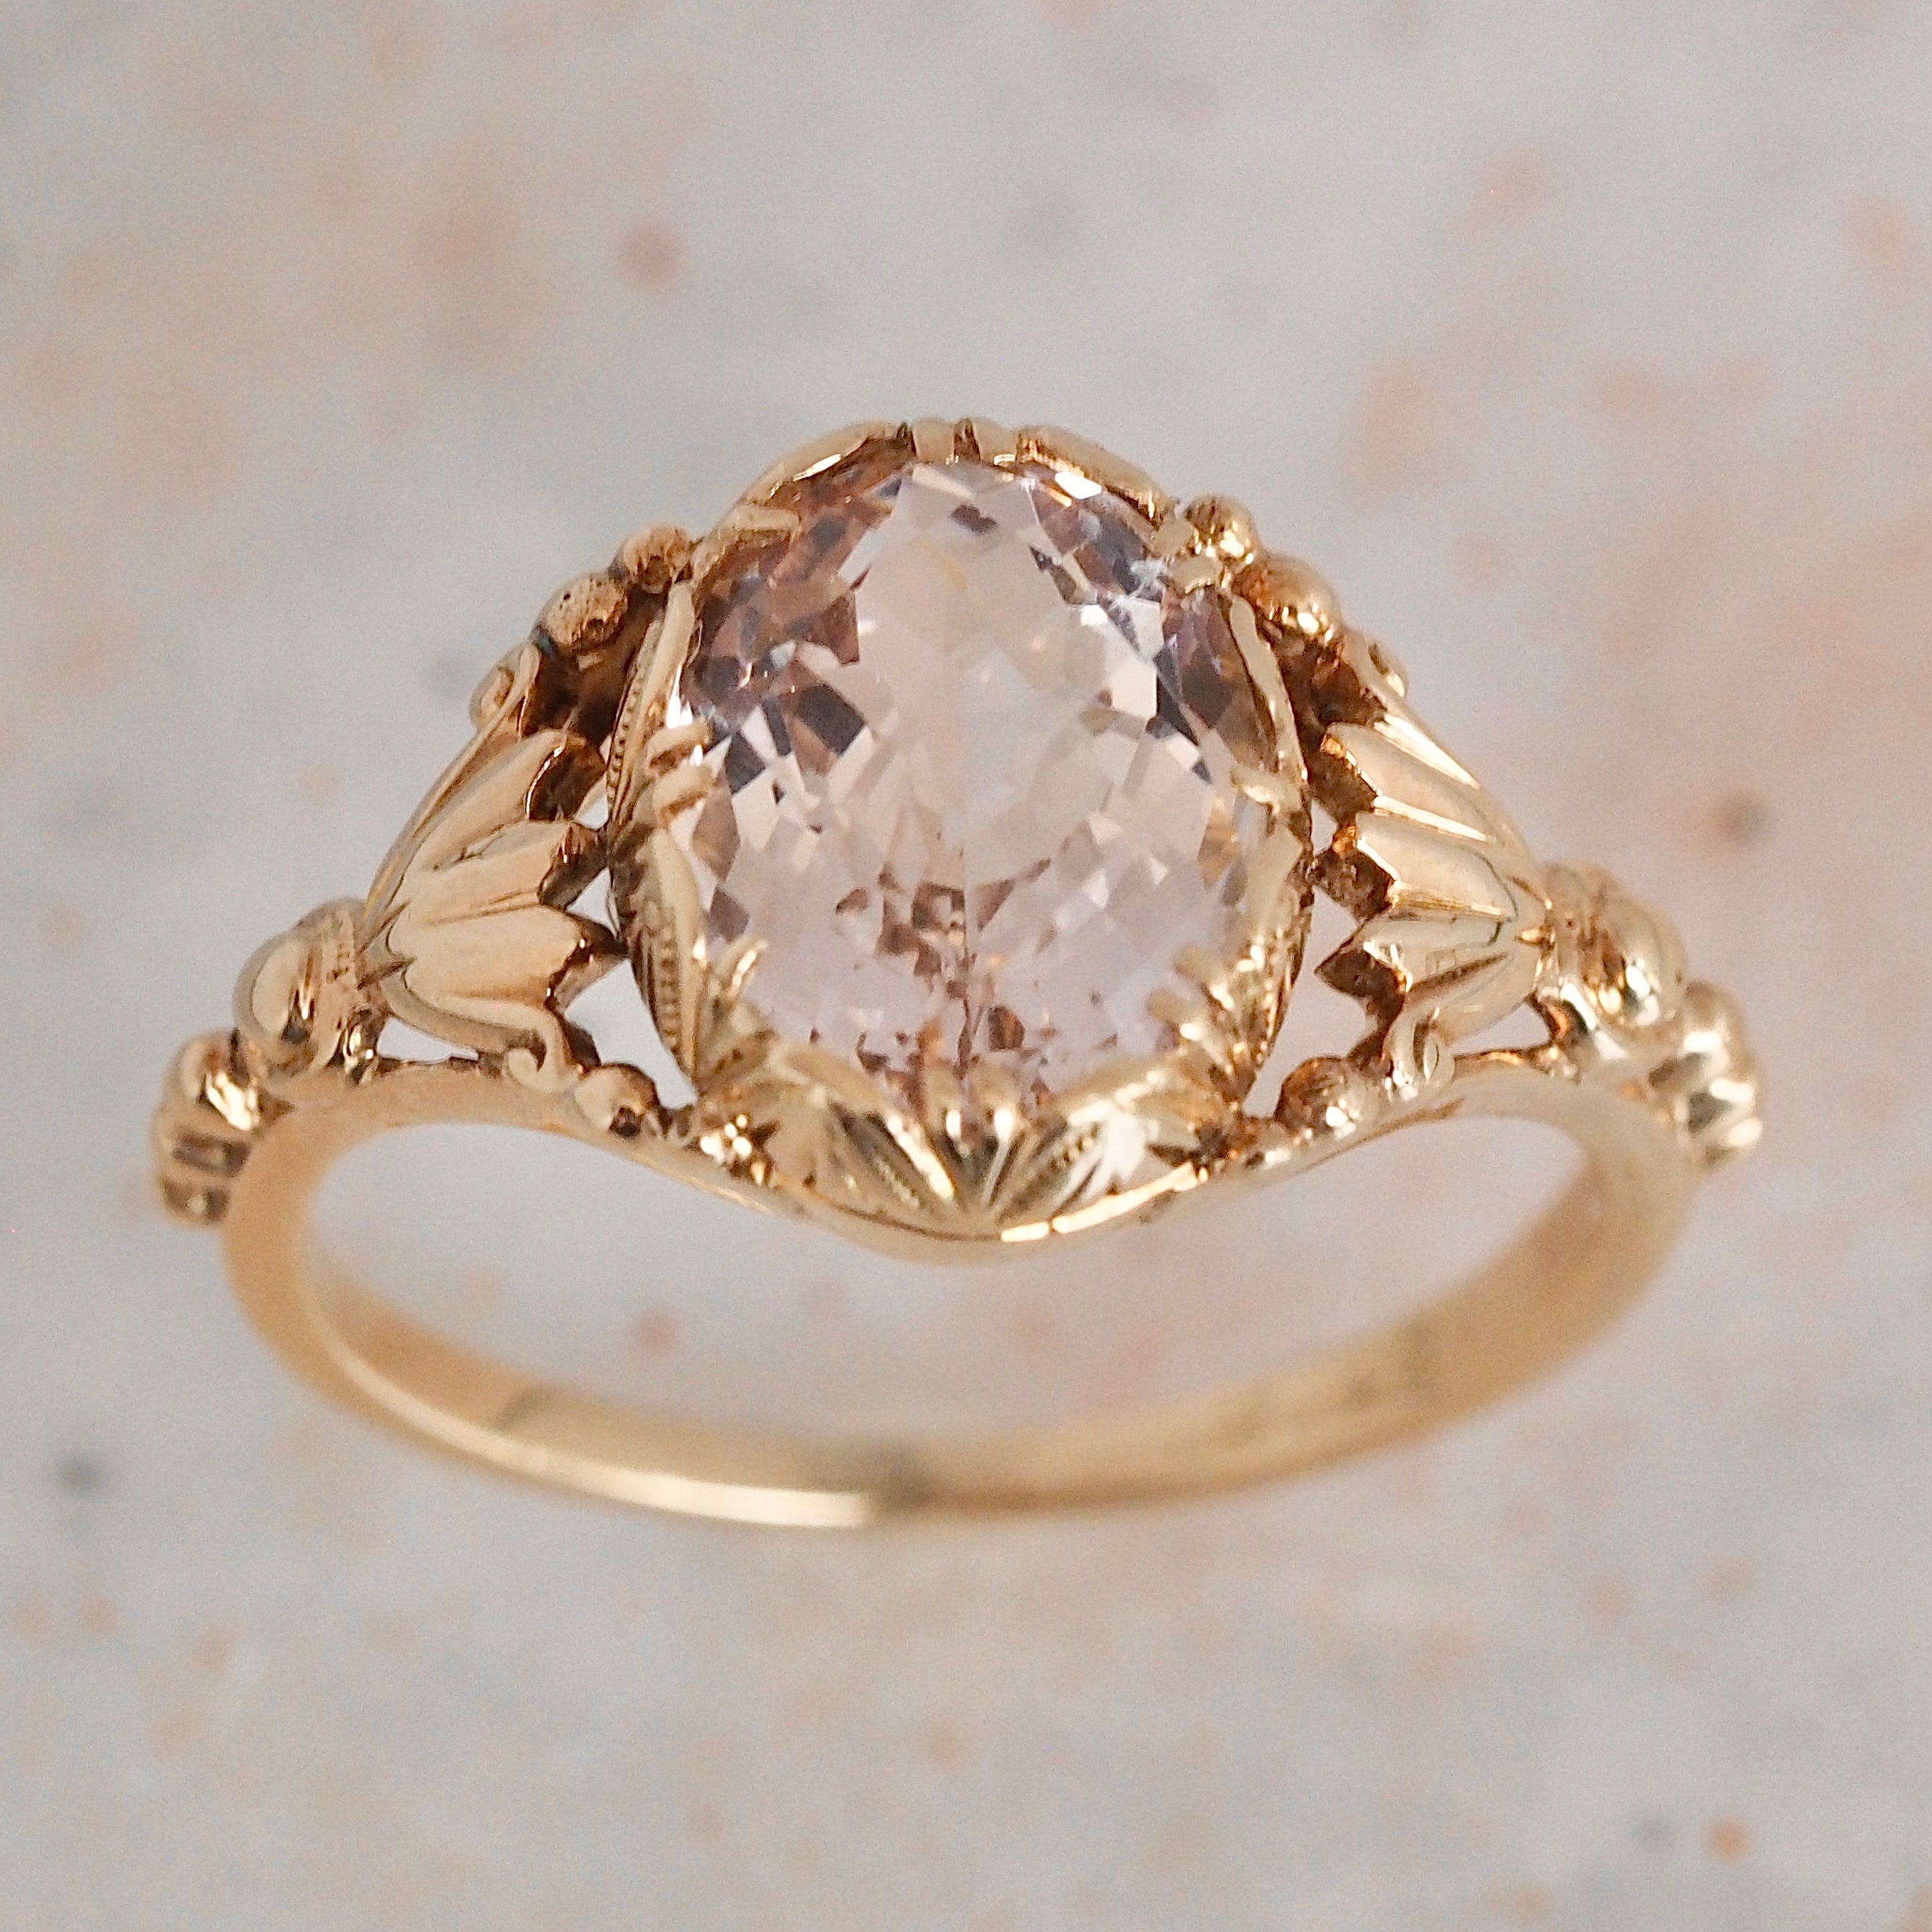 Antique 14k Gold Morganite Ring